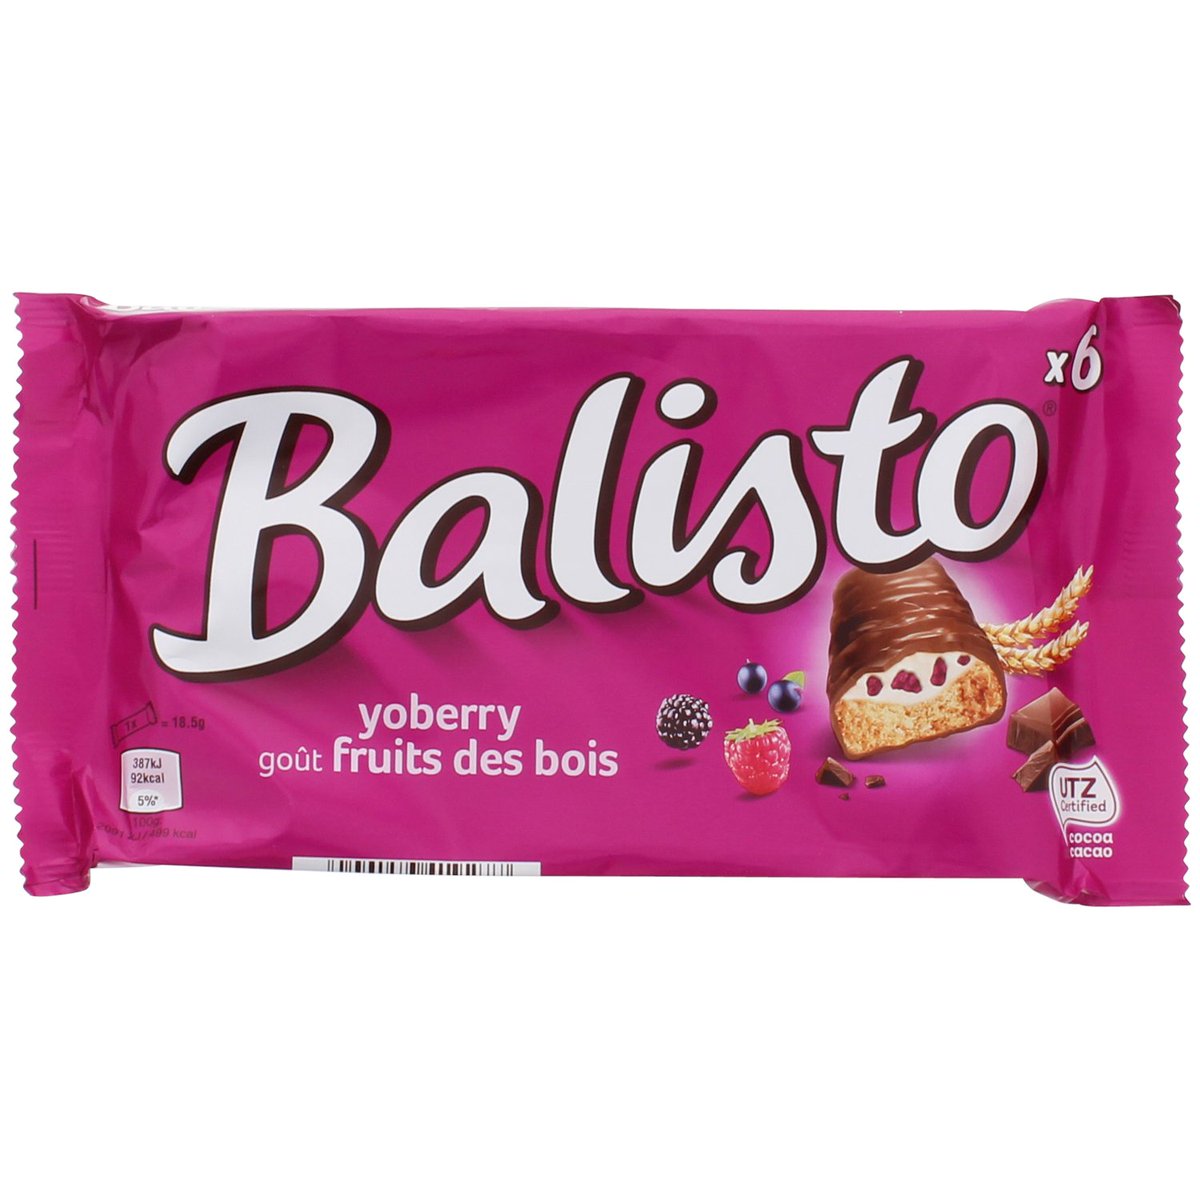 25) "Balisto yoberry" Sans commentaire